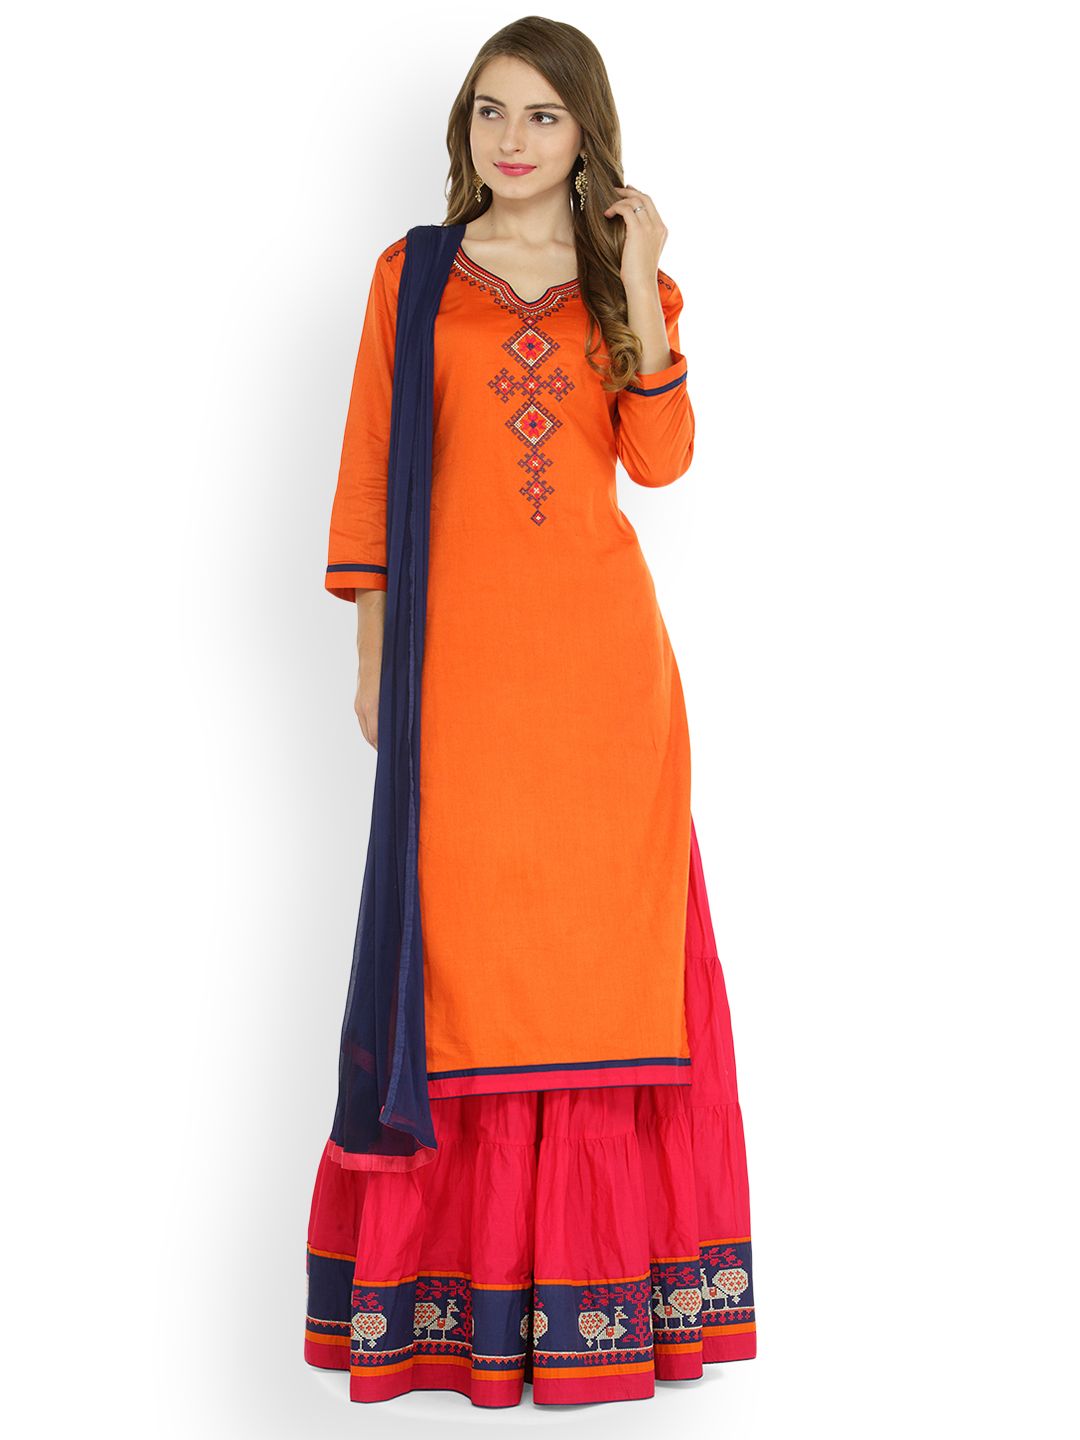 Kvsfab Orange & Blue Cotton Blend Semi-Stitched Dress Material Price in India